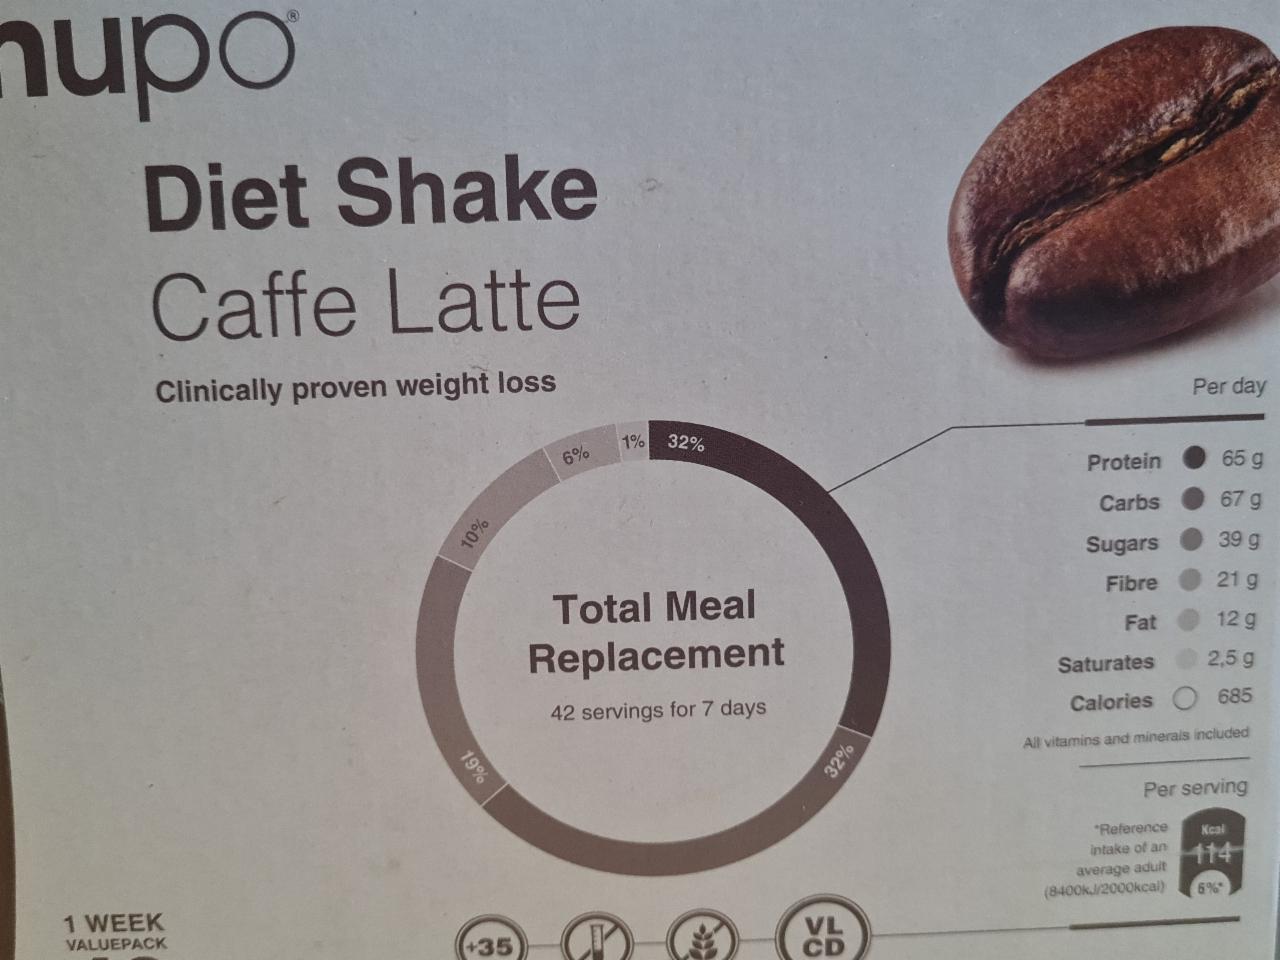 Fotografie - Diet Shake Caffe Latte Nupo